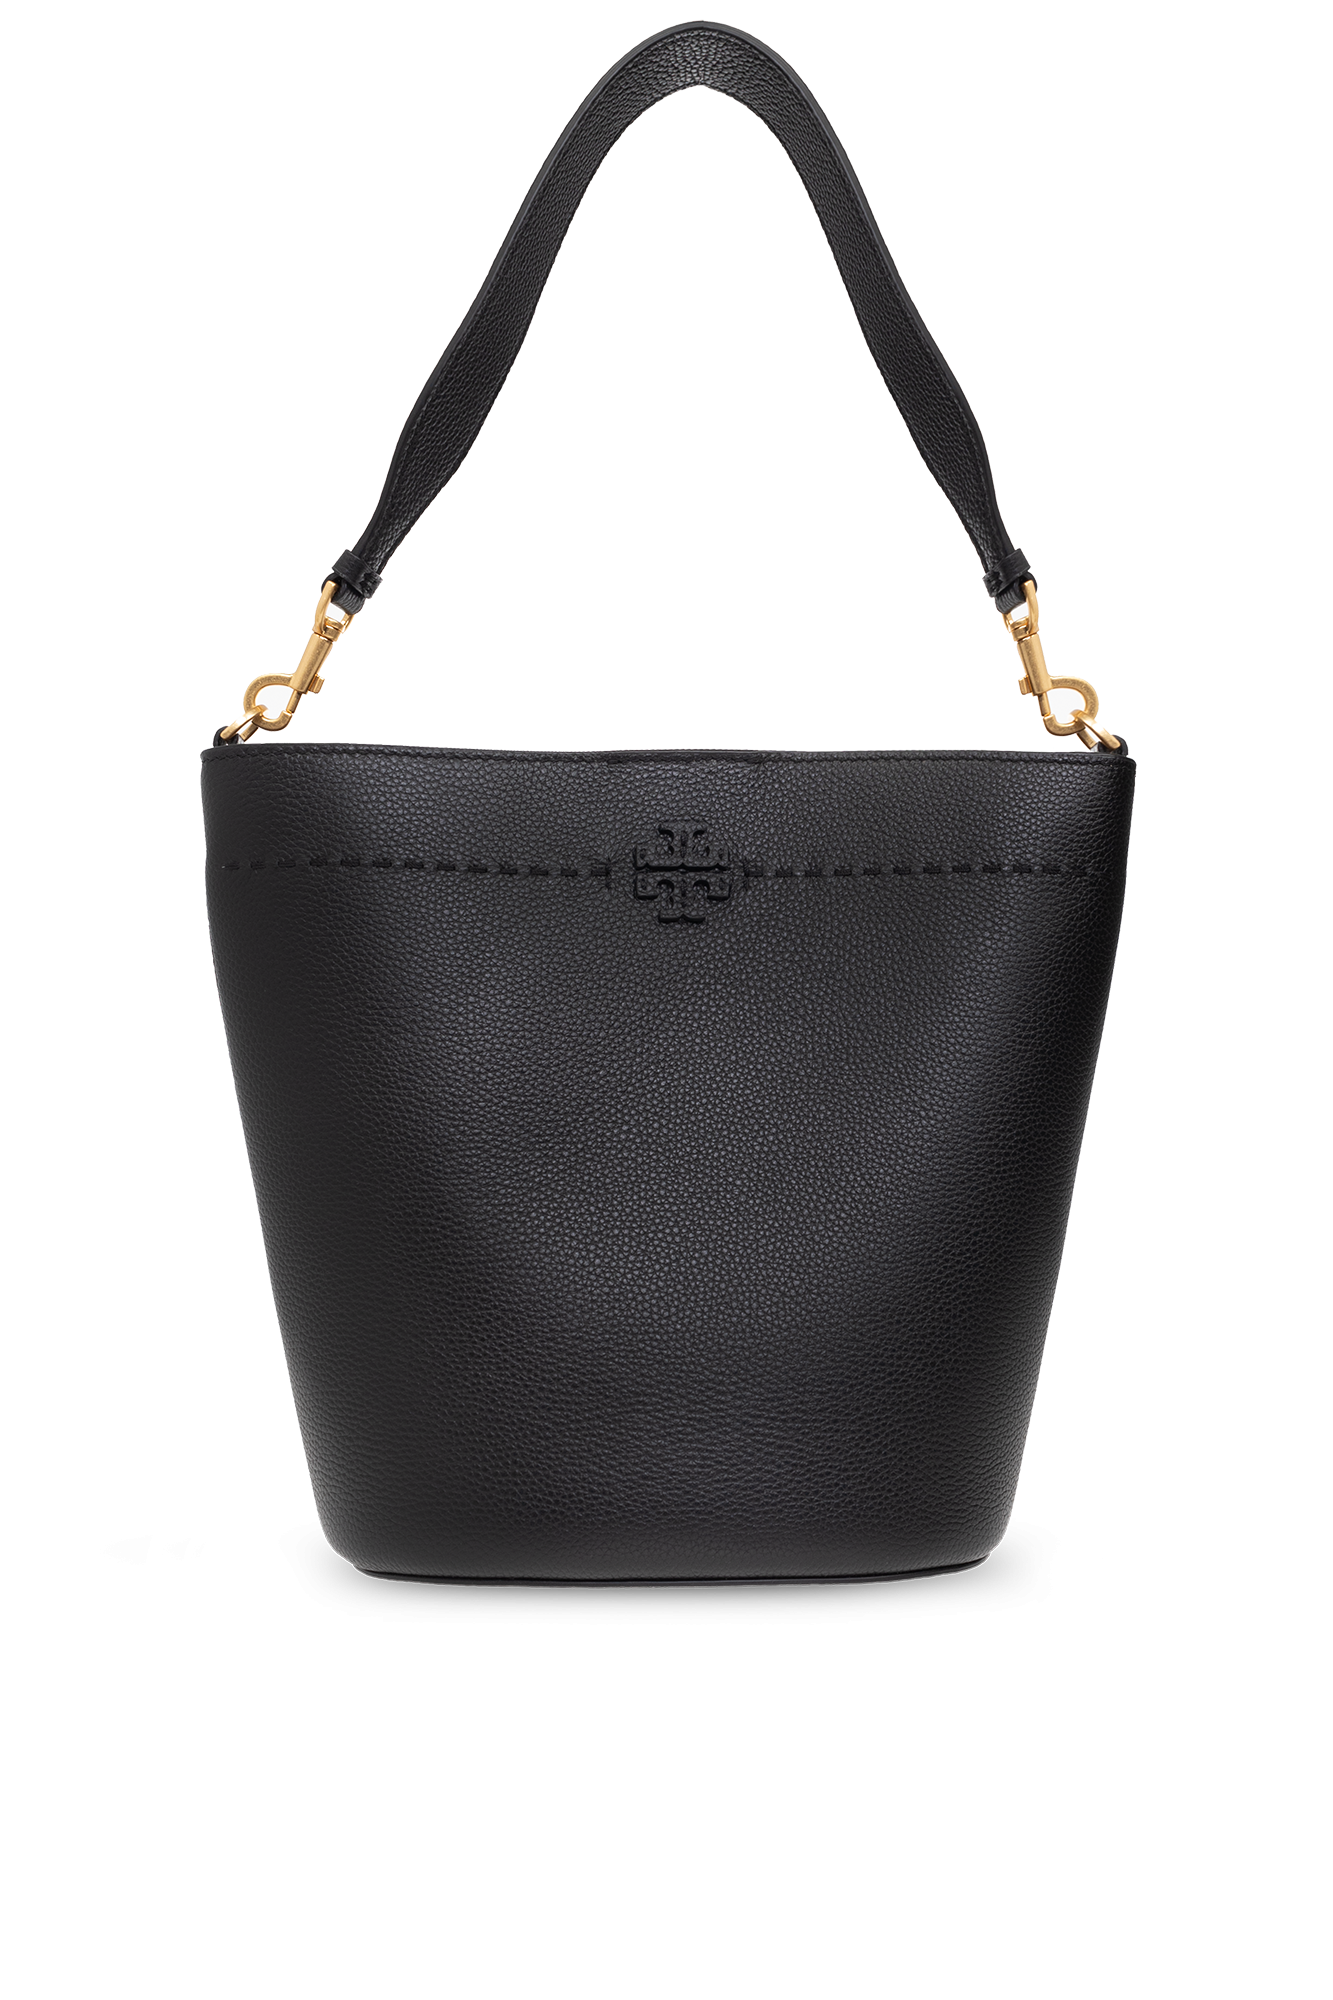 Tory Burch Women's Mcgraw Small Bucket Bag, Black, One Size